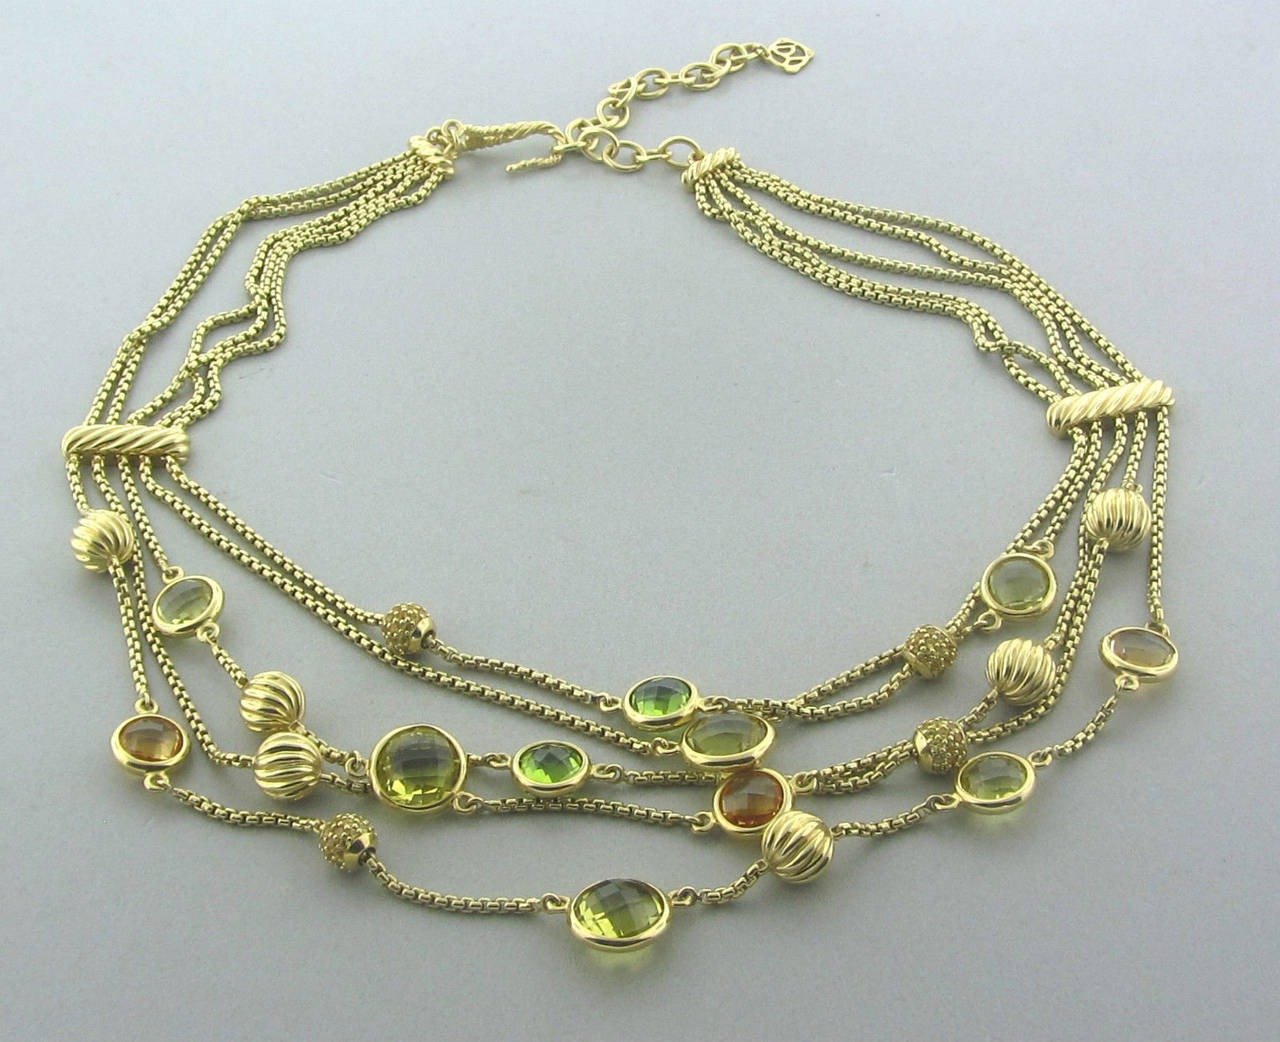 Attractive David Yurman multi strand 18K yellow gold necklace featuring Citrine, Peridot and Lemon Citrine gemstones. 17